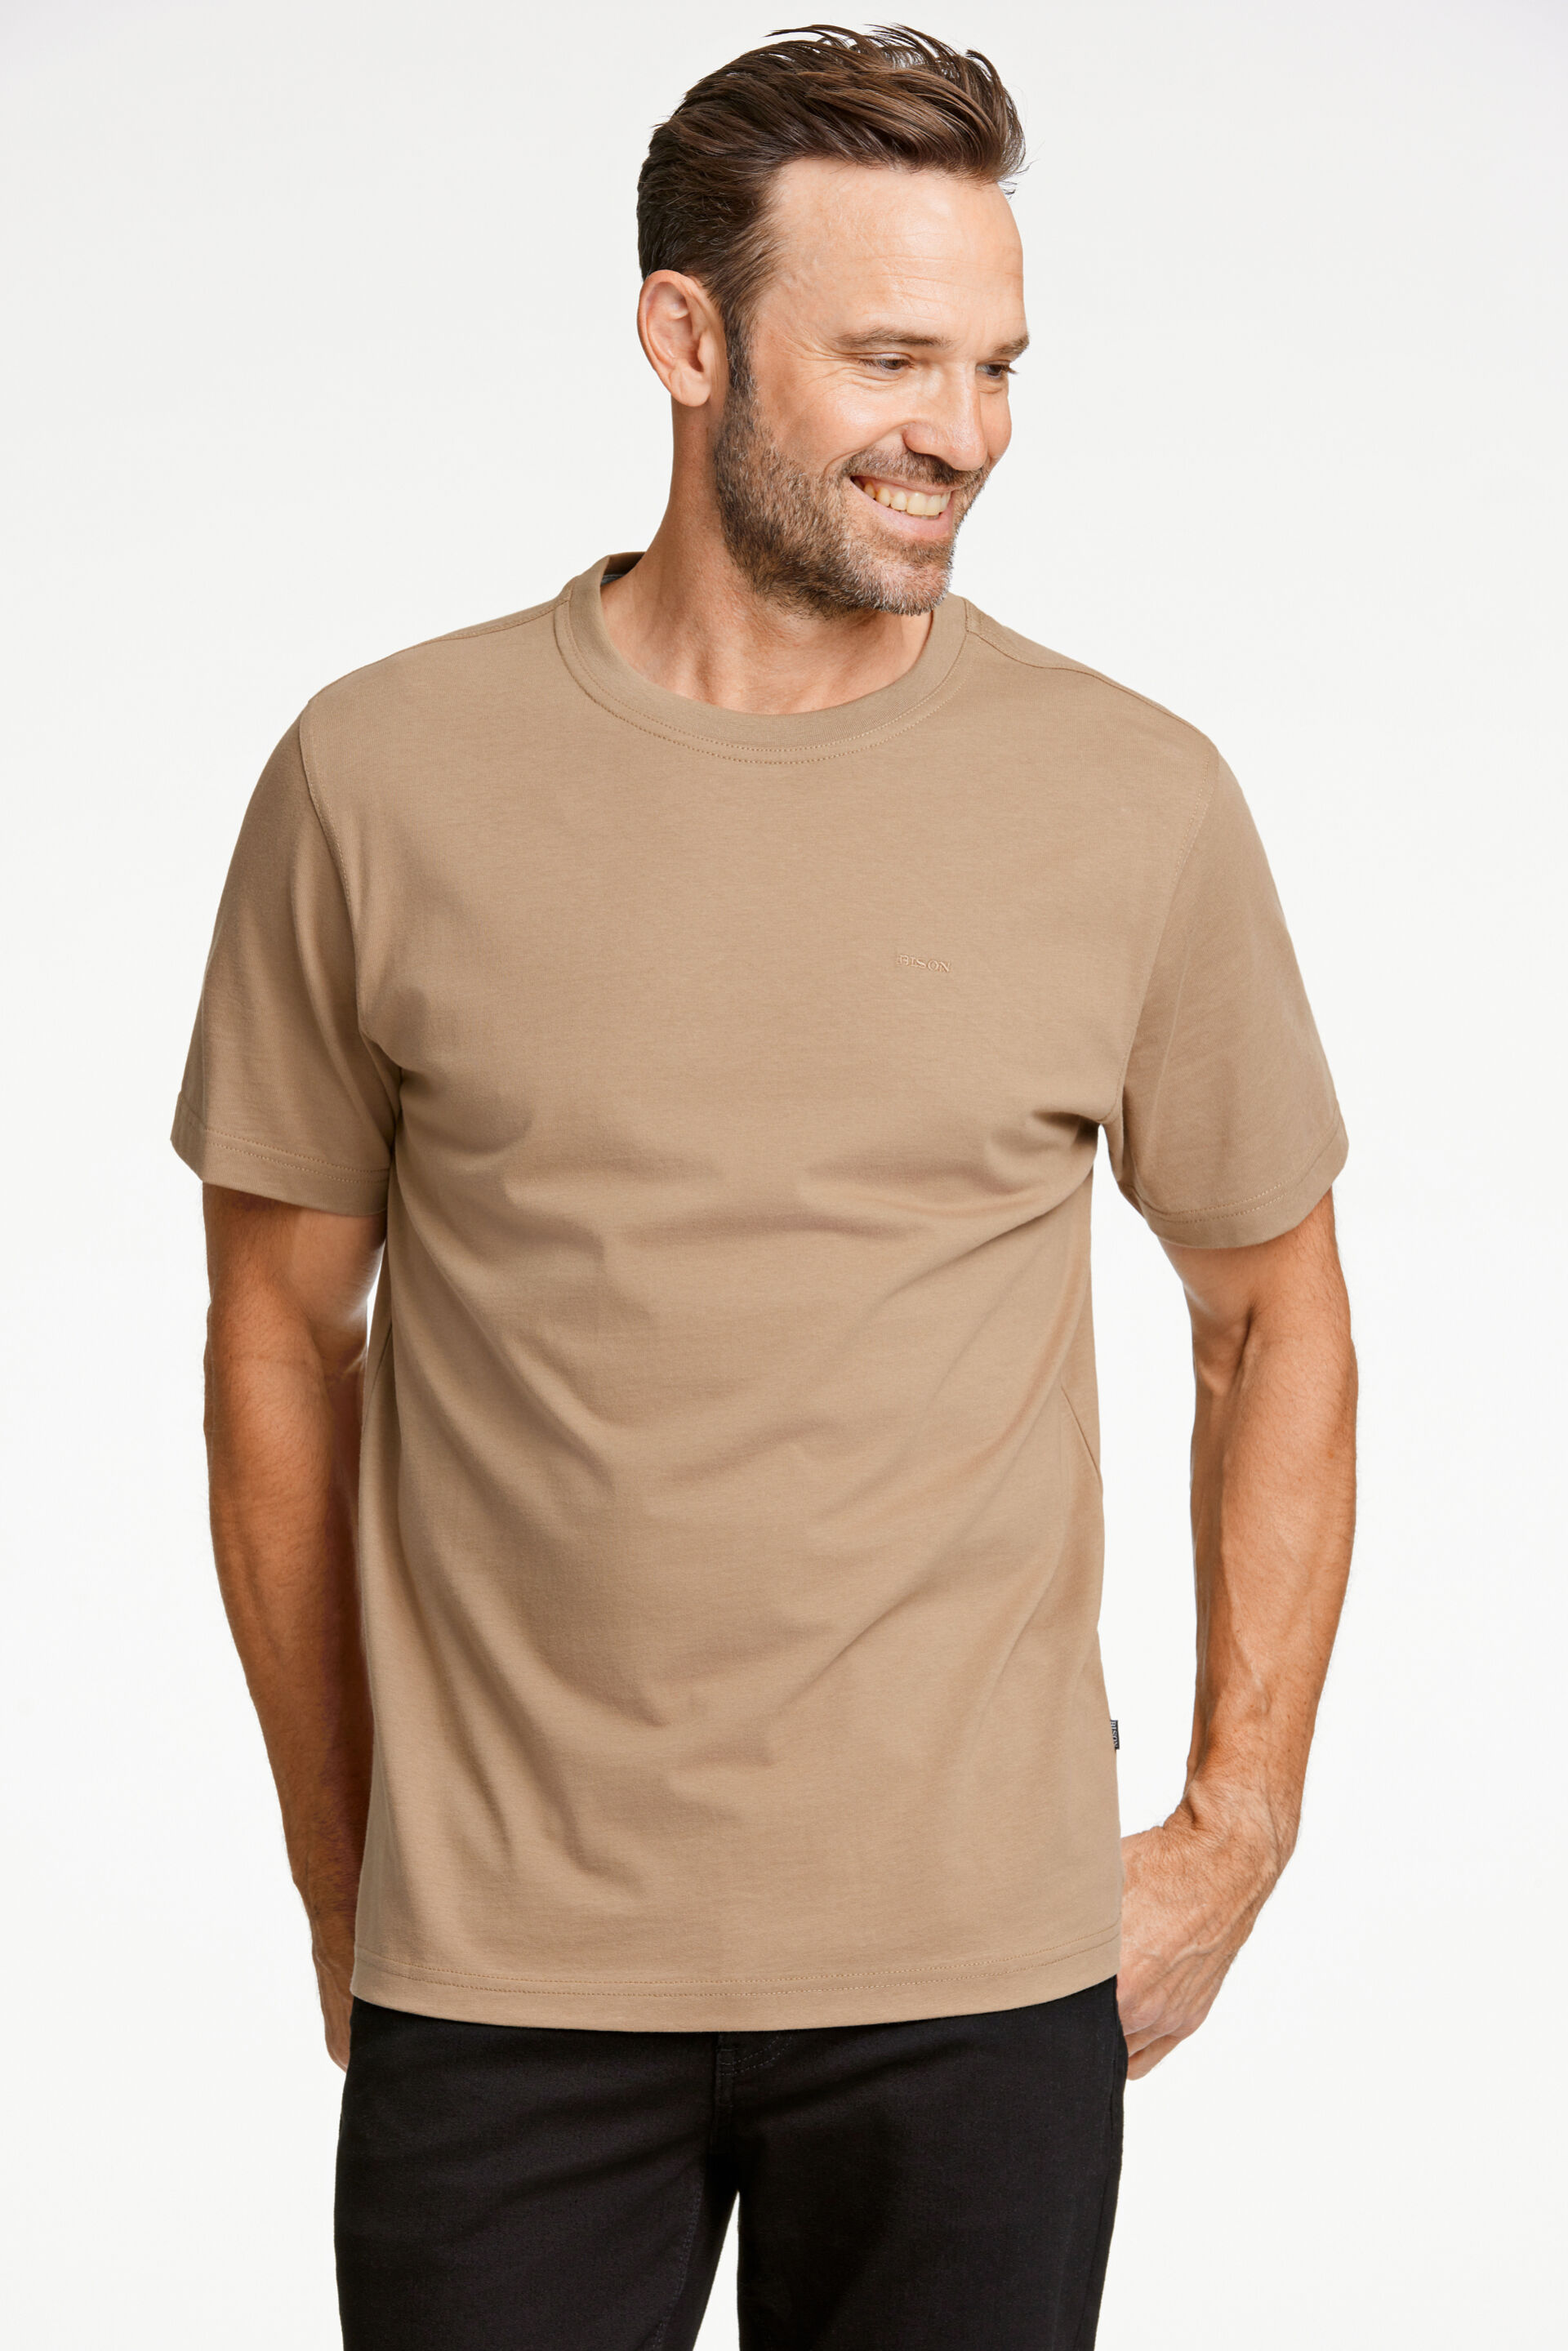 Bison  T-shirt Sand 80-40000